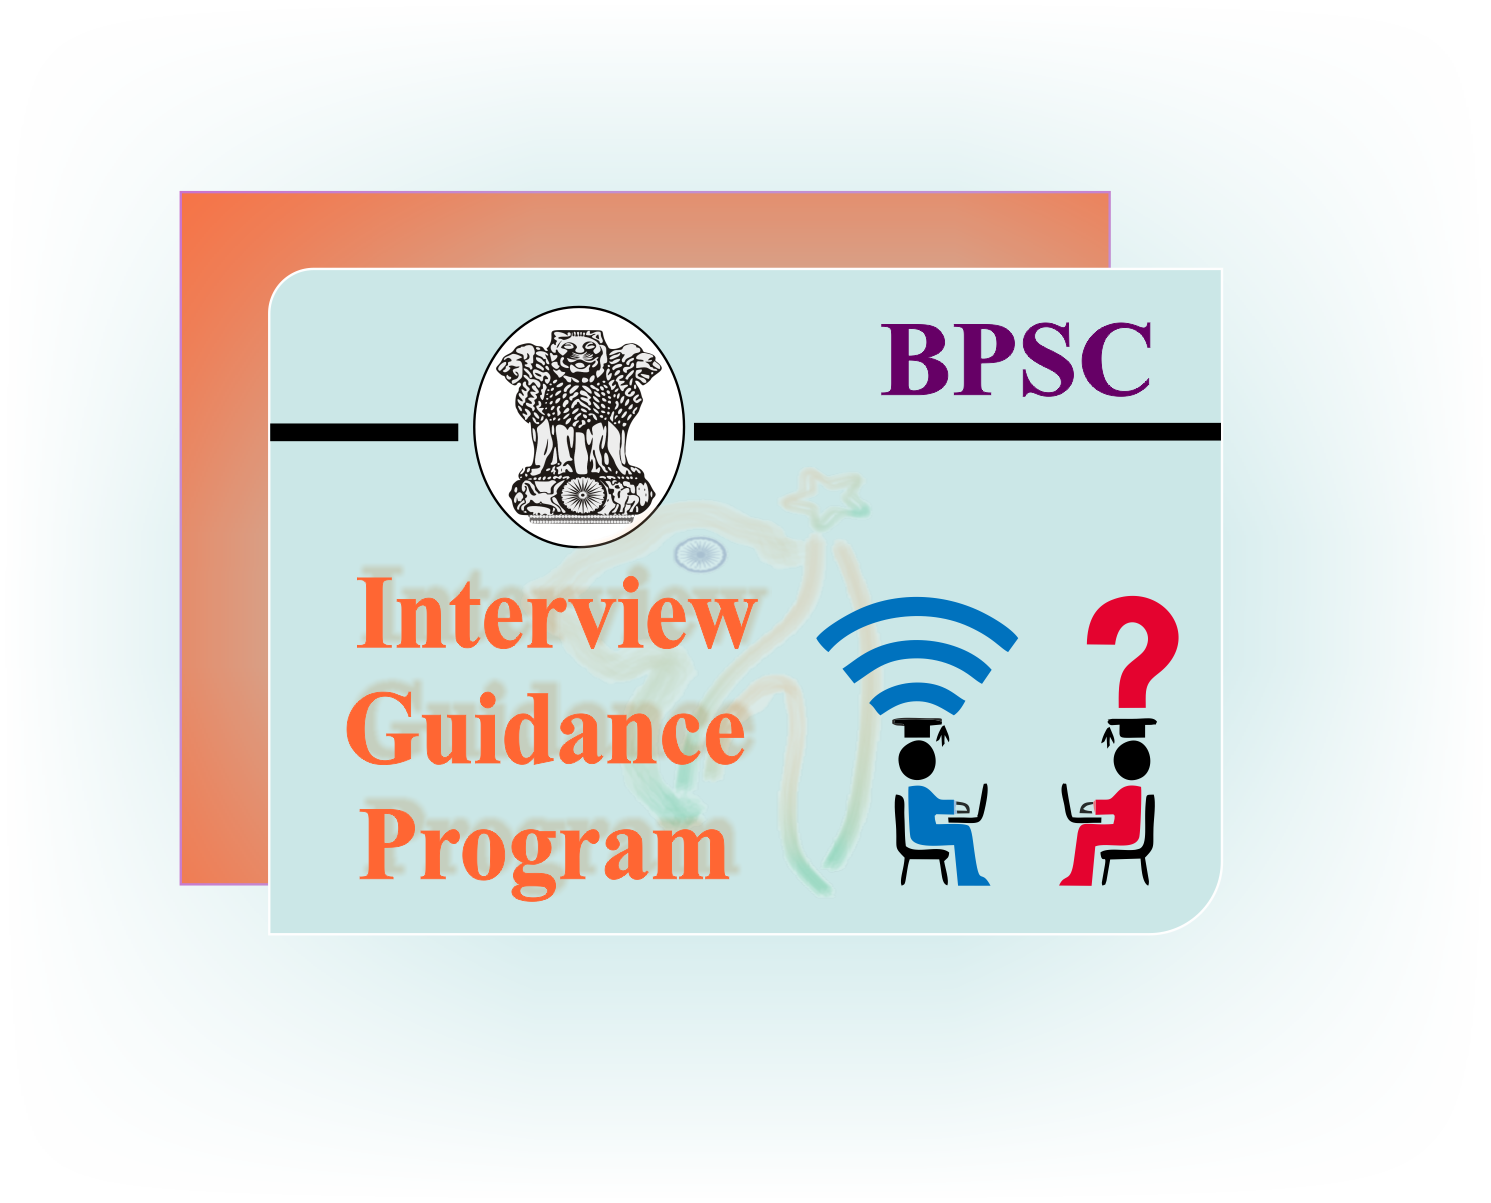 BPSC Interview Guidance Program